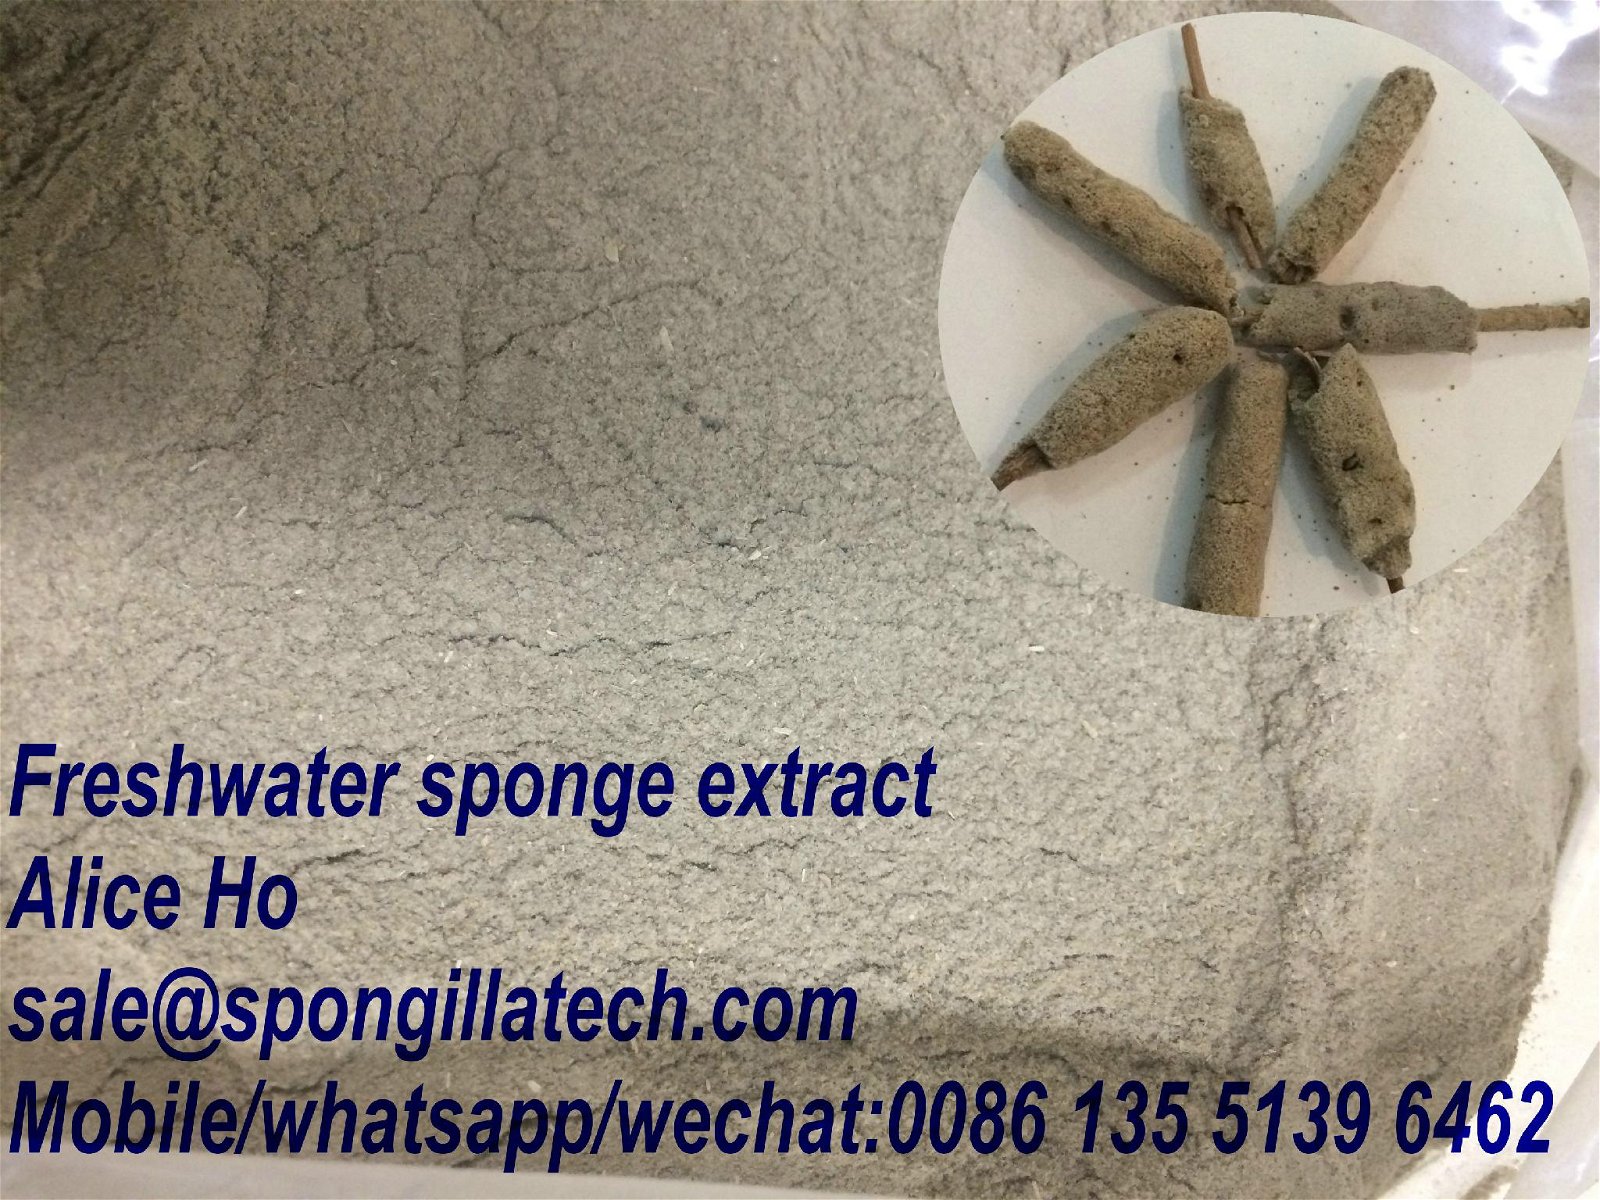 Factory price freshwater sponge extract 3